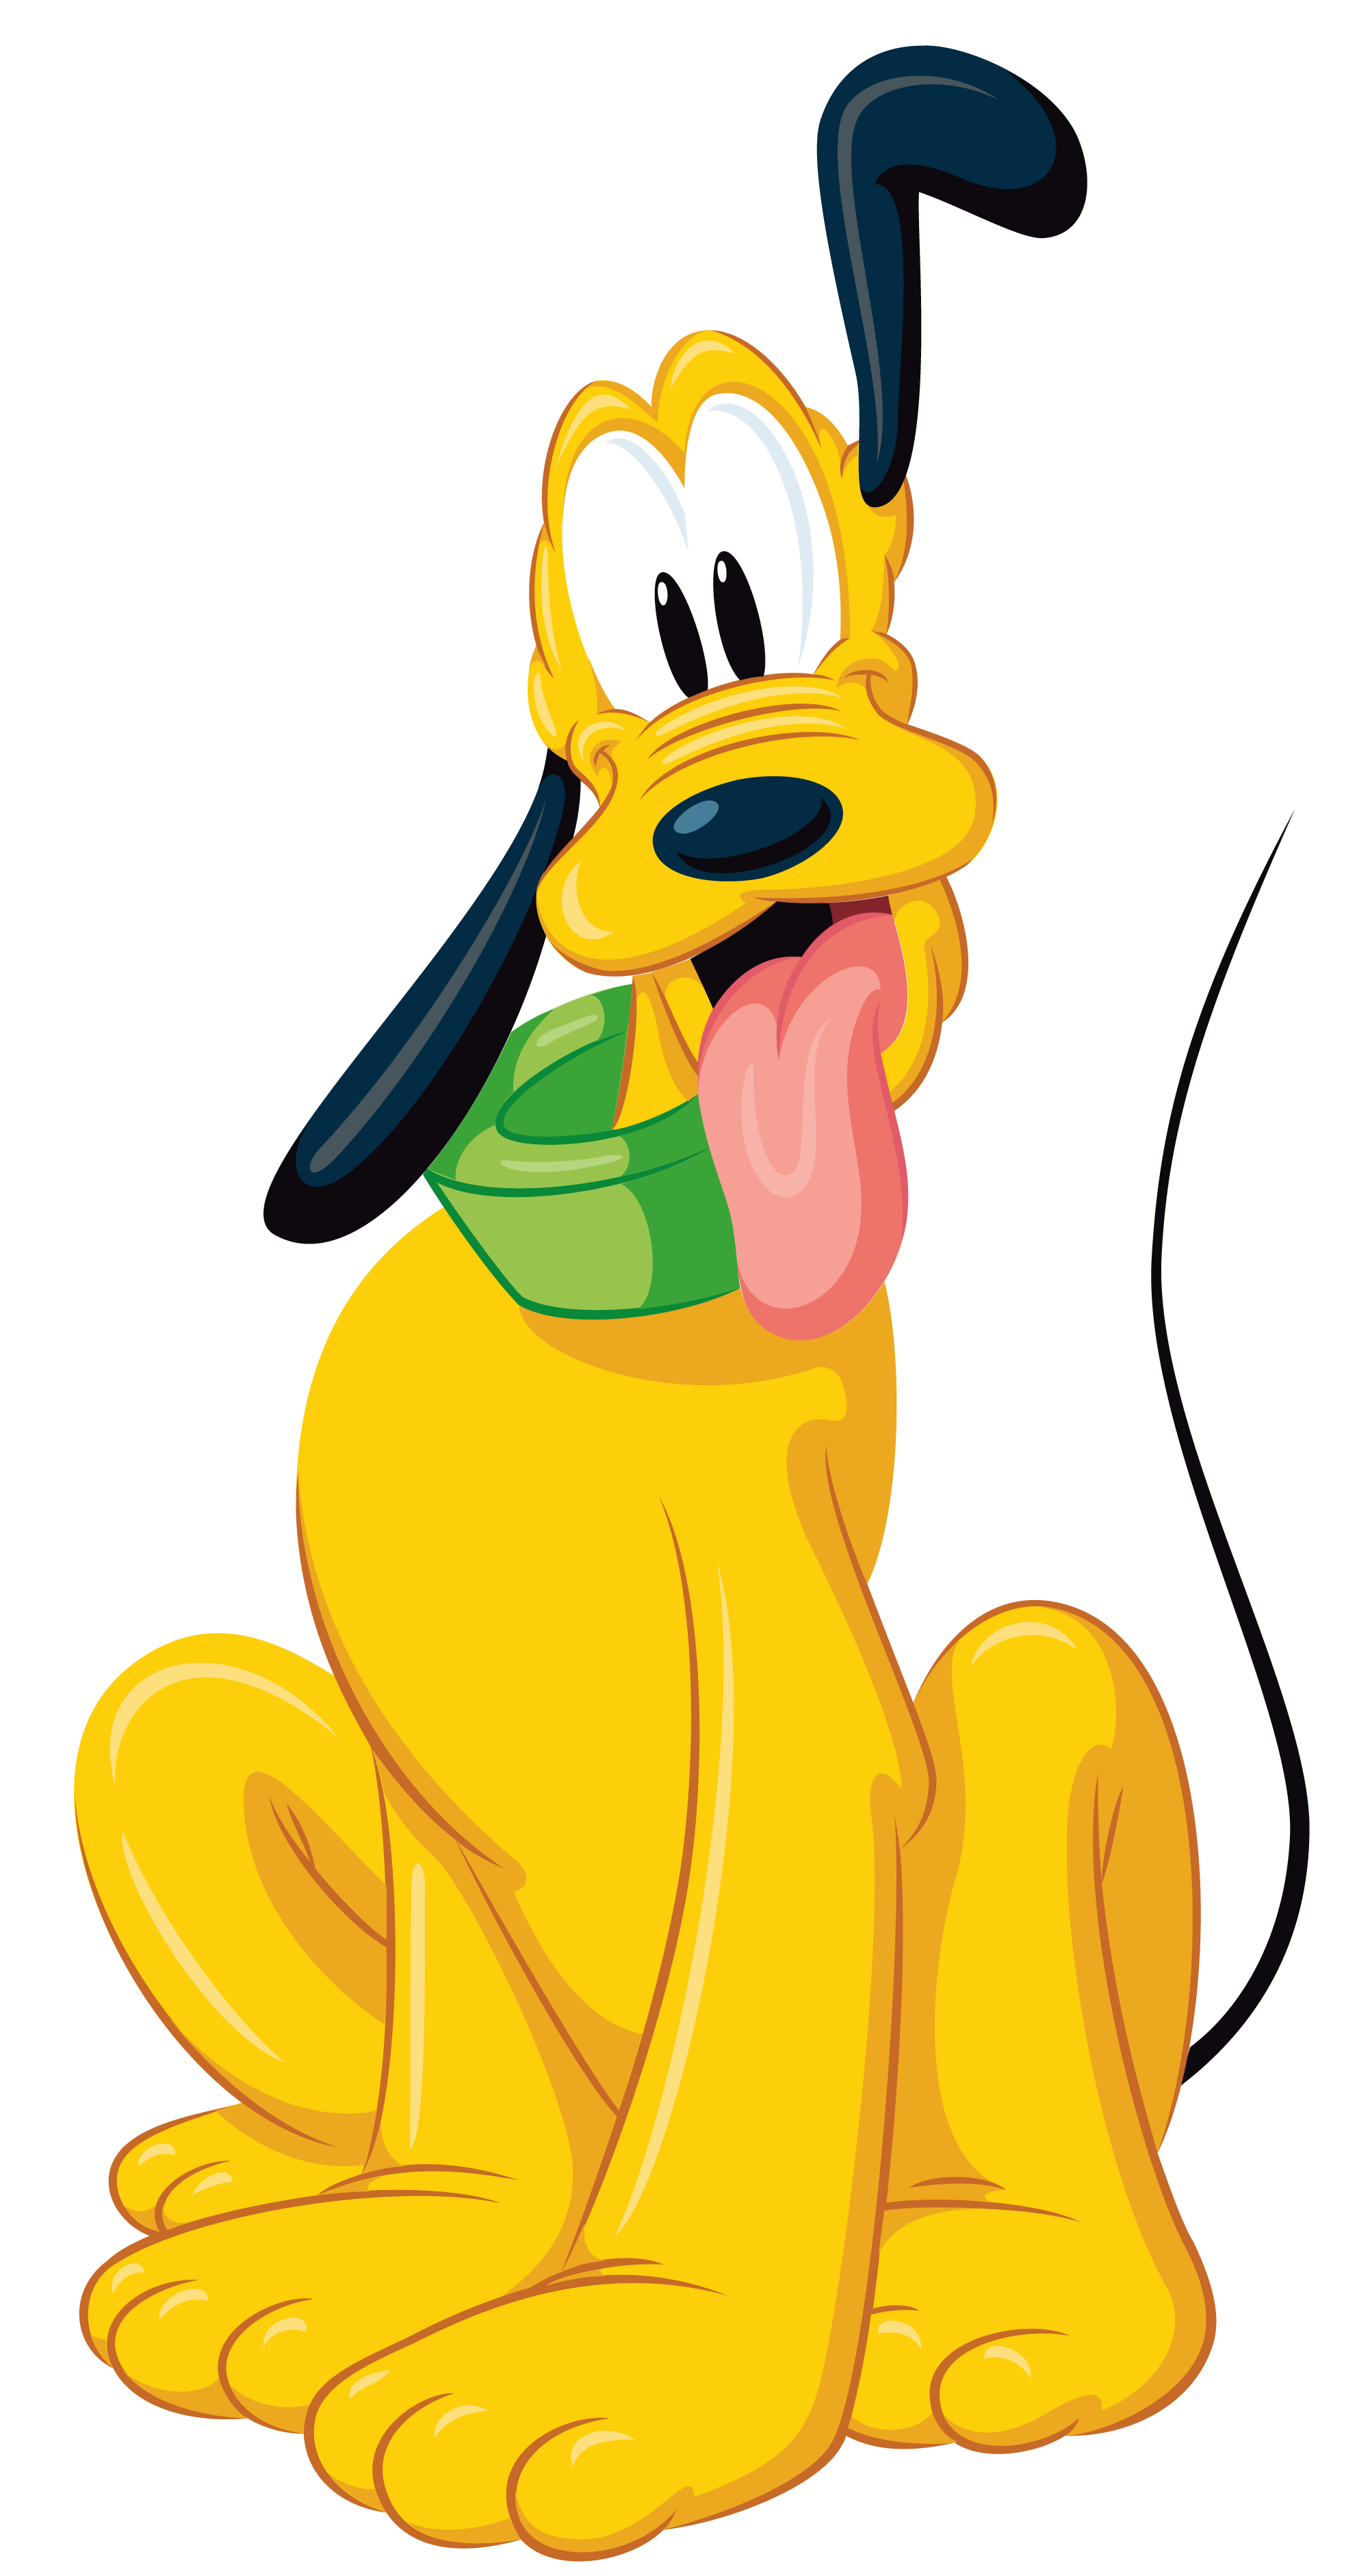 Mickey Minnie Pluto Donald Goofy Duck Cartoon PNG Image